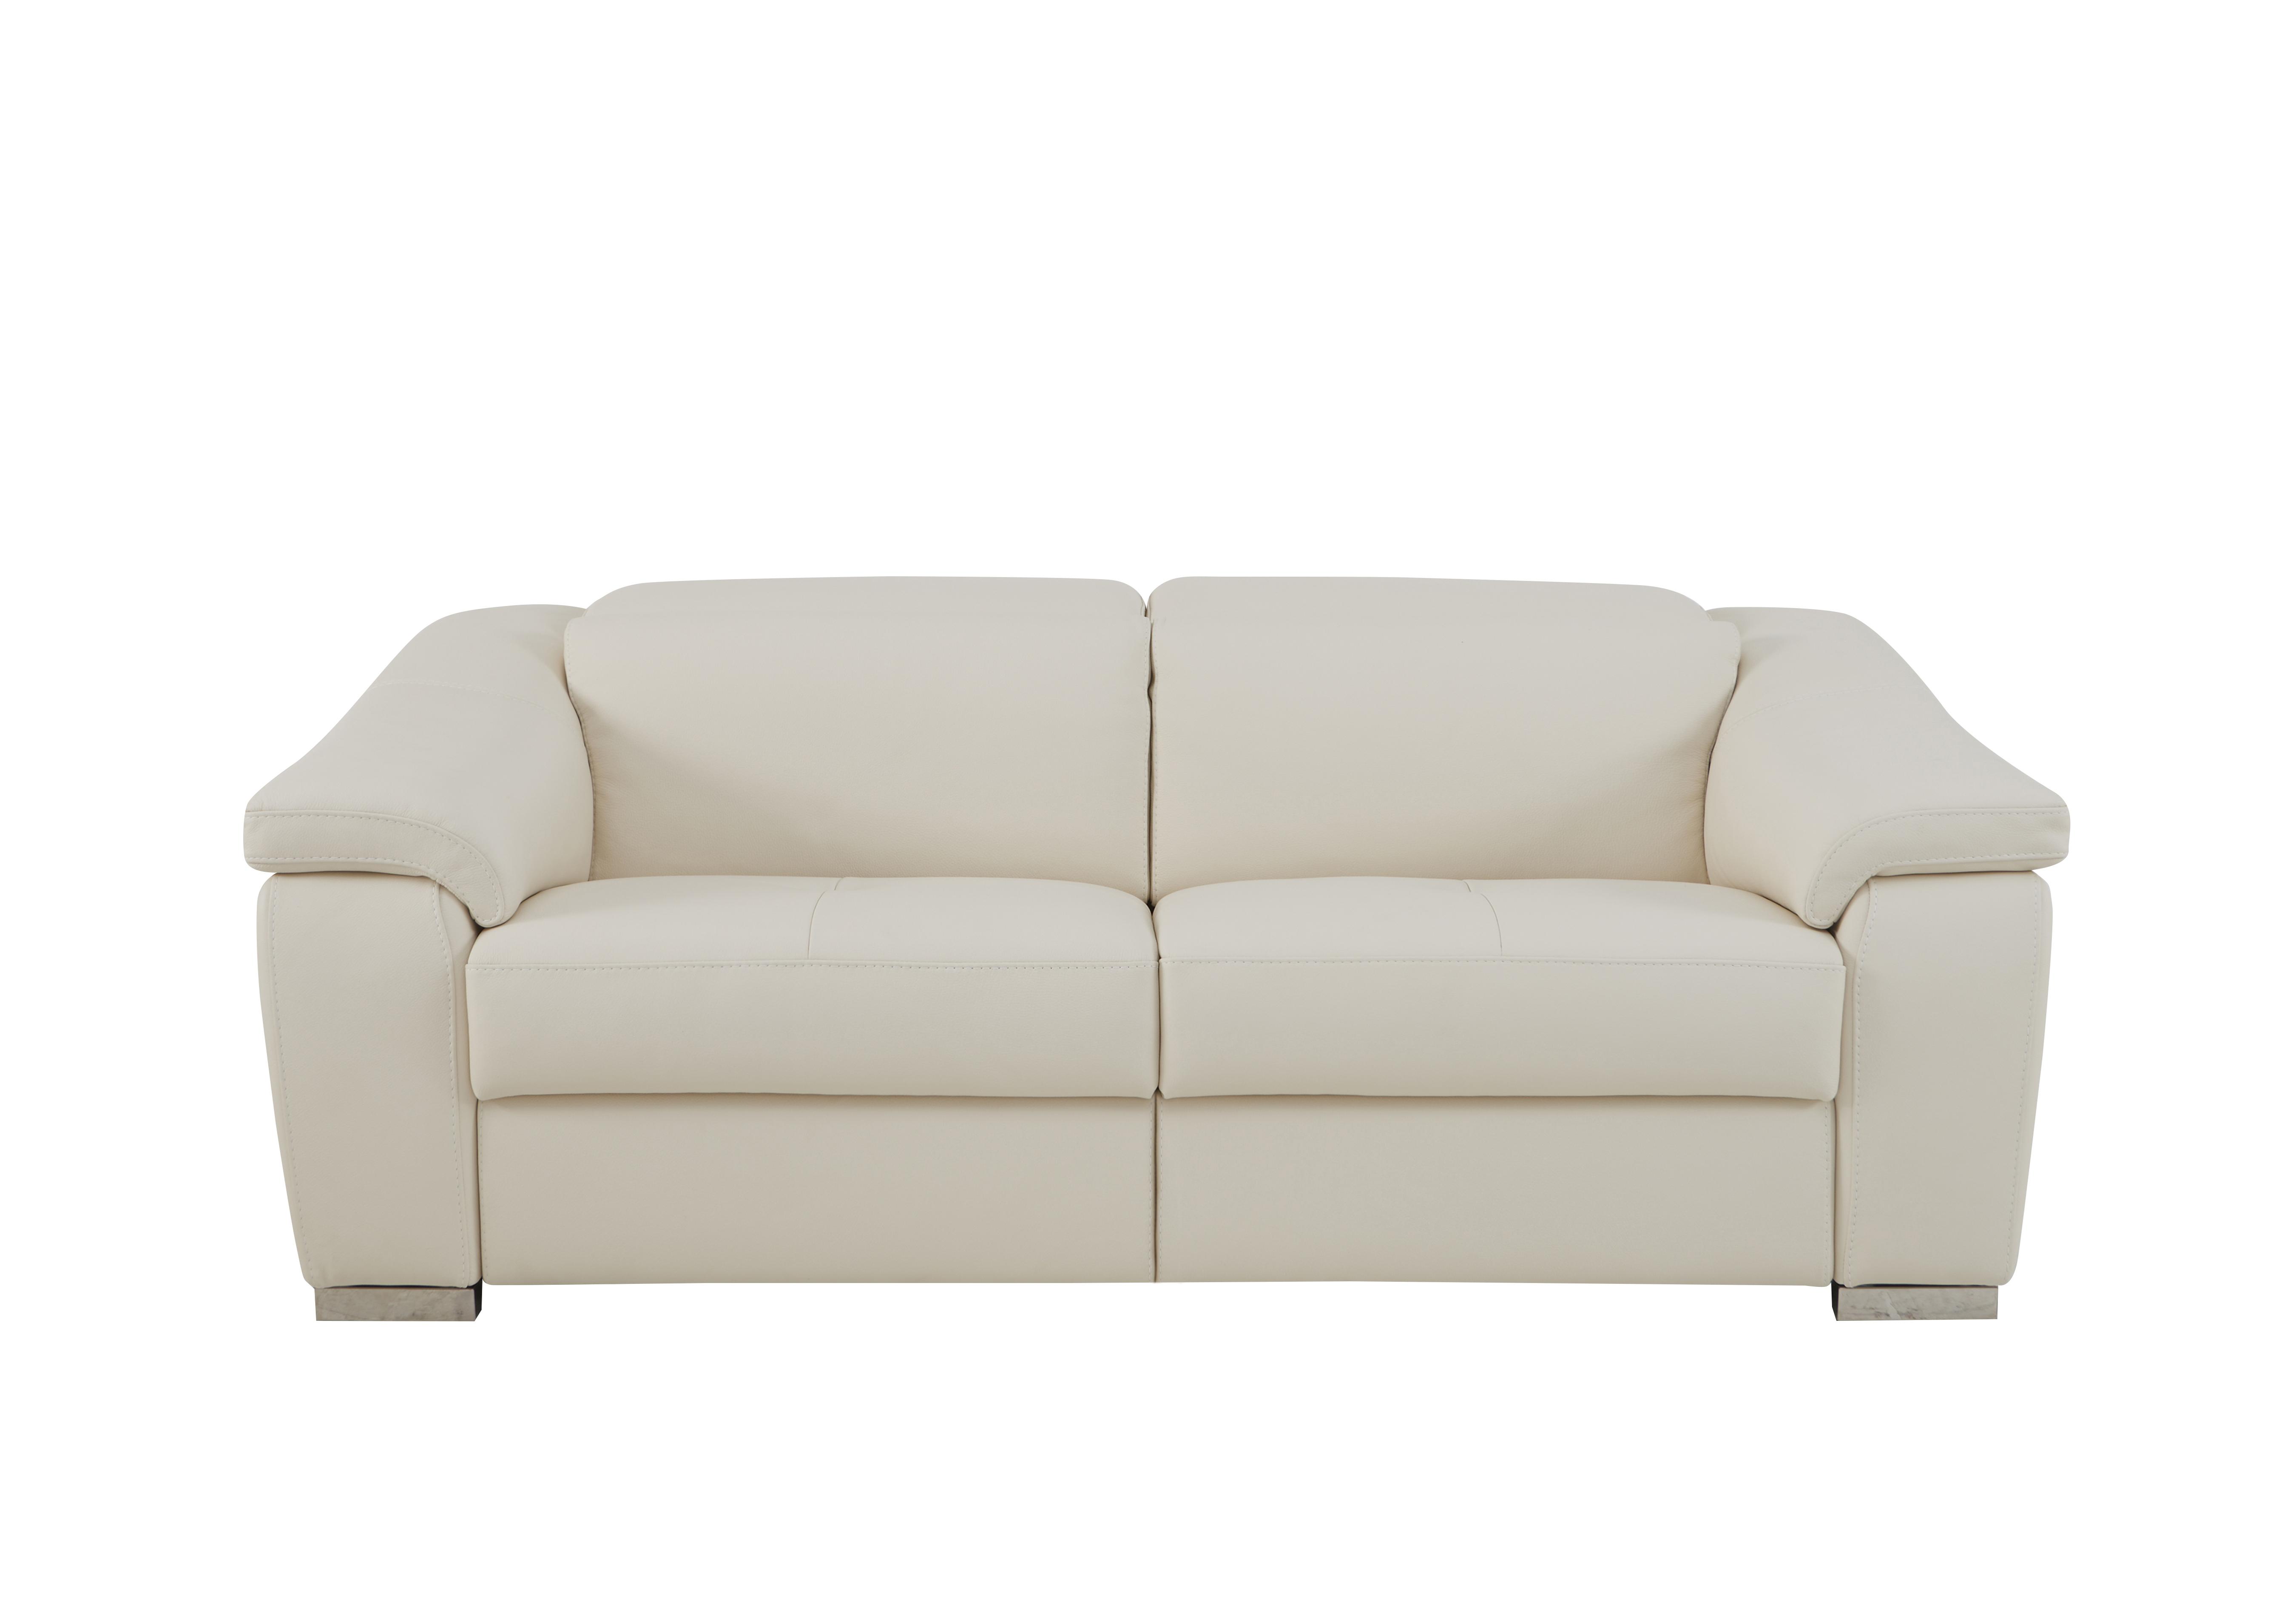 Galileo 3 Seater Leather Sofa in Torello Bianco 93 Ch on Furniture Village